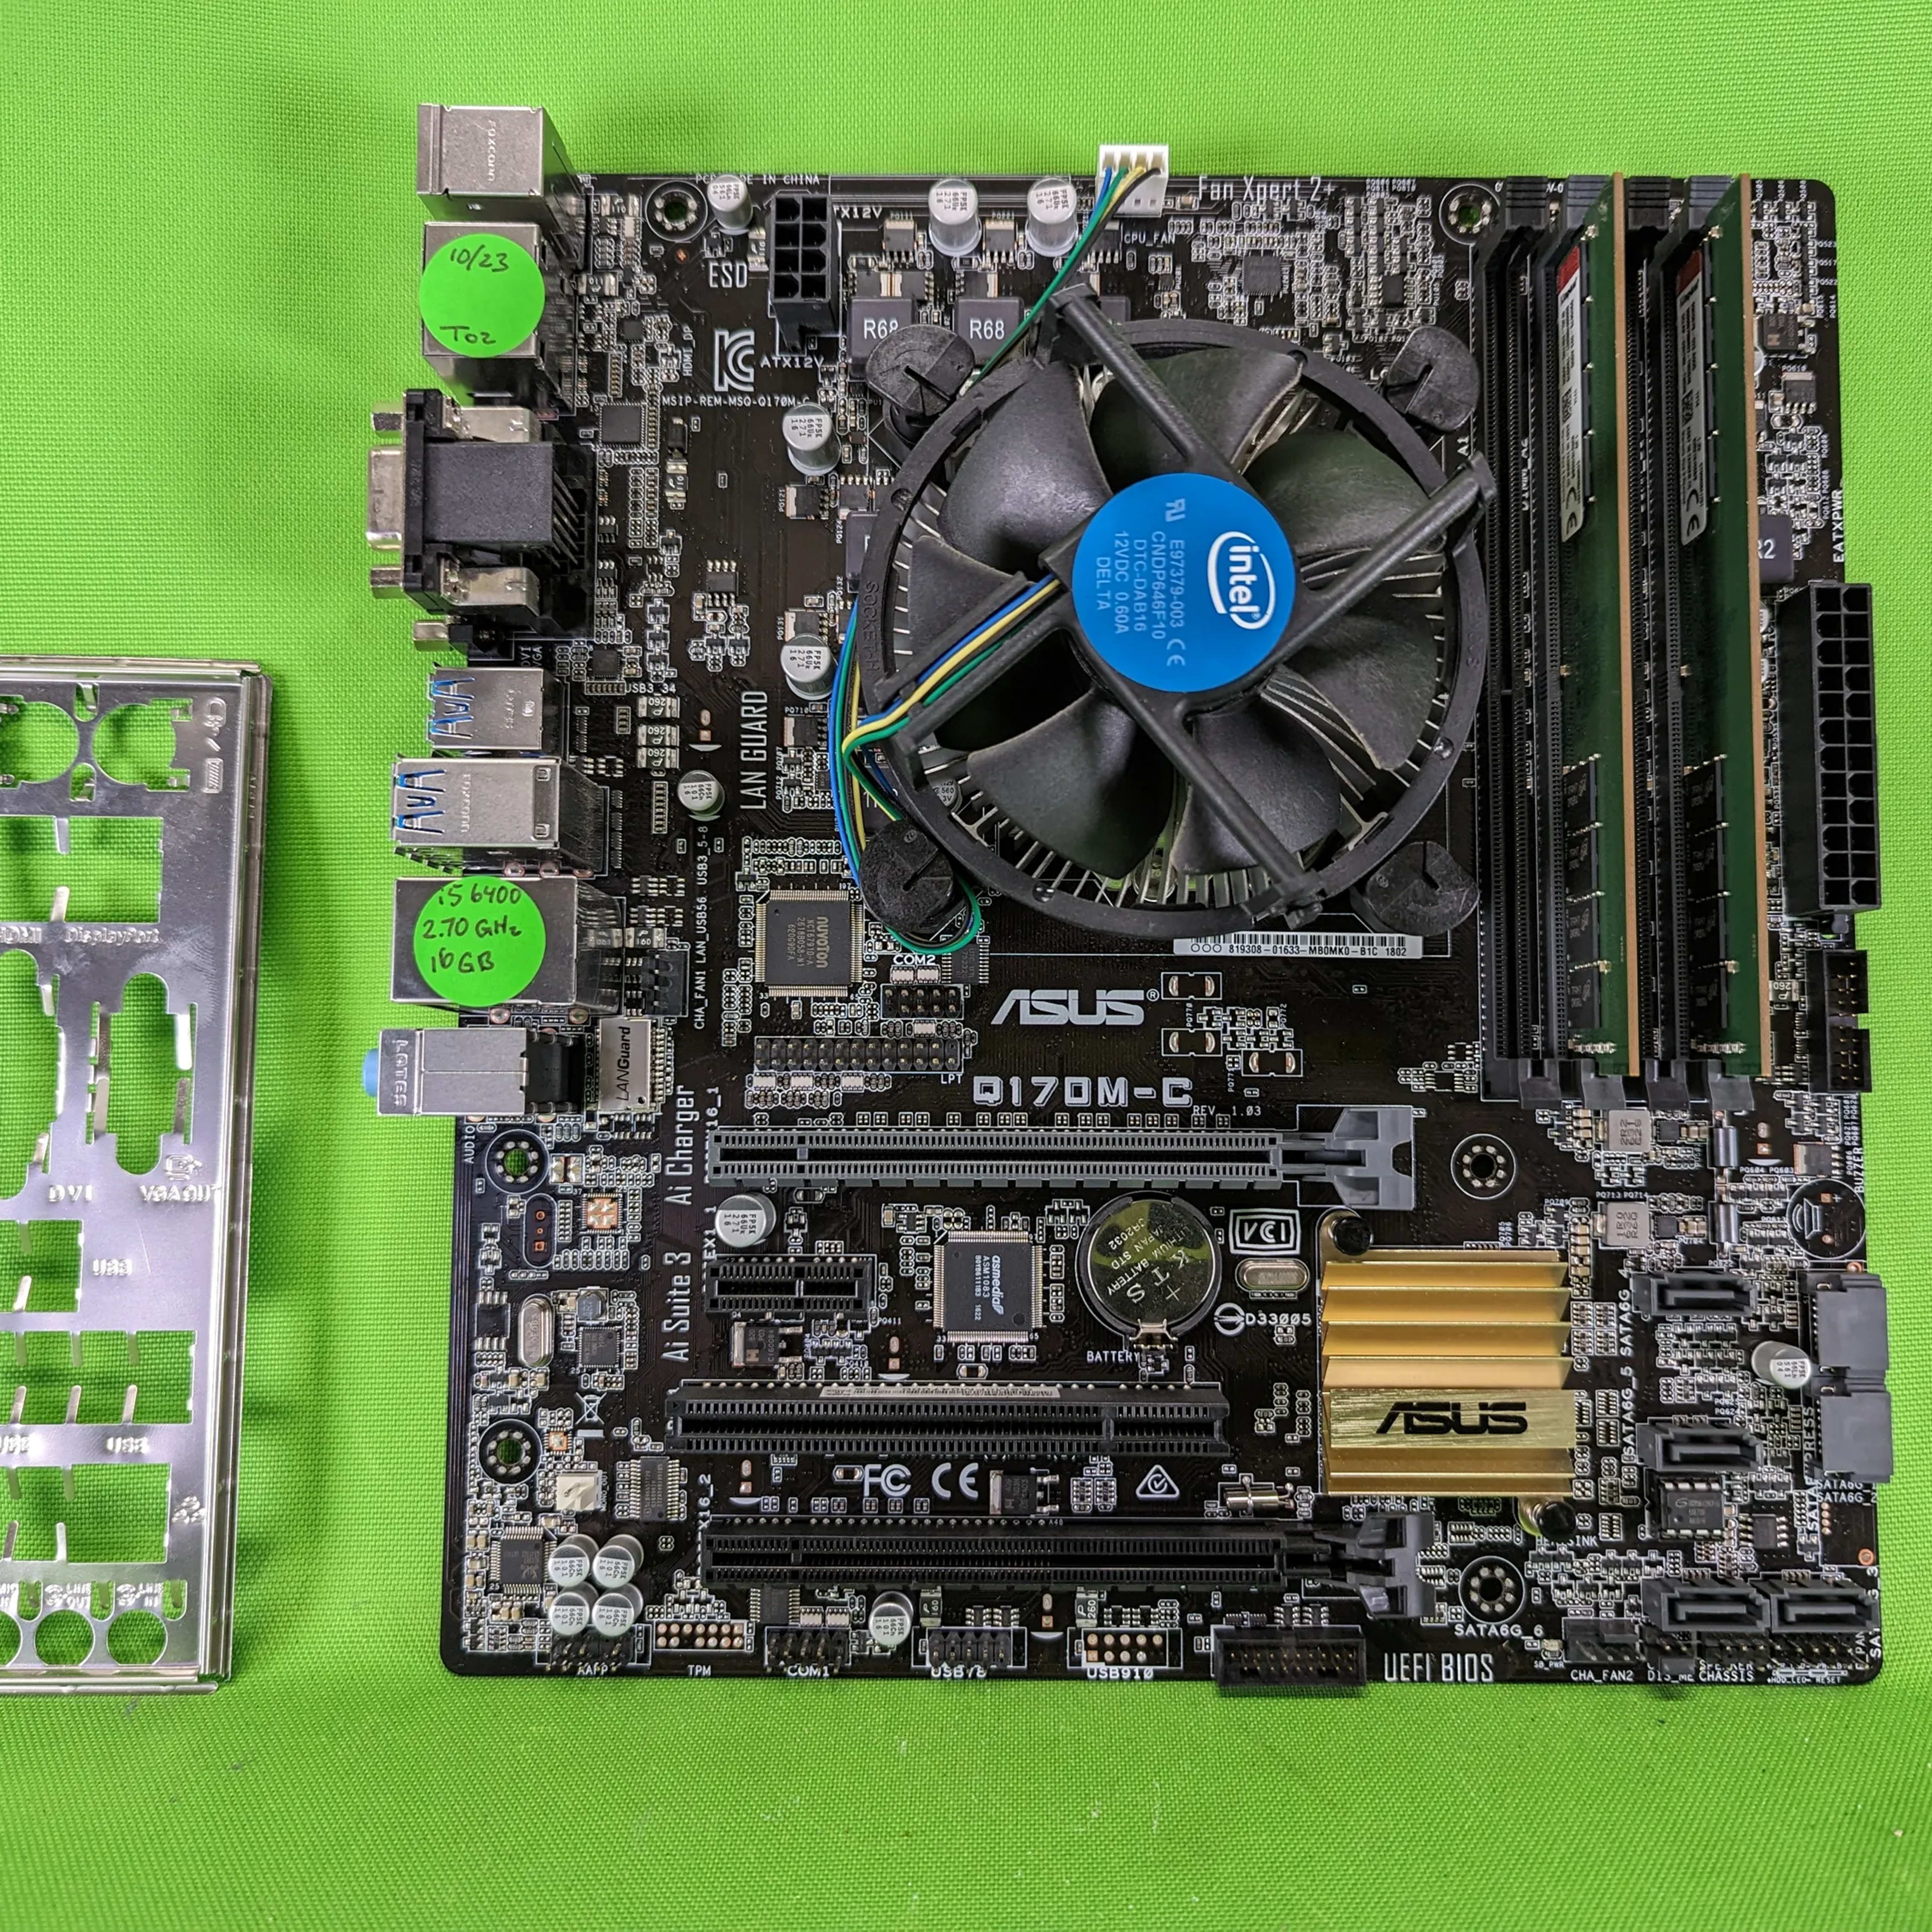 Asus Q170M-C Motherboard Combo + 16GB DDR4 Ram + Intel Core i5-6400 + Cooler